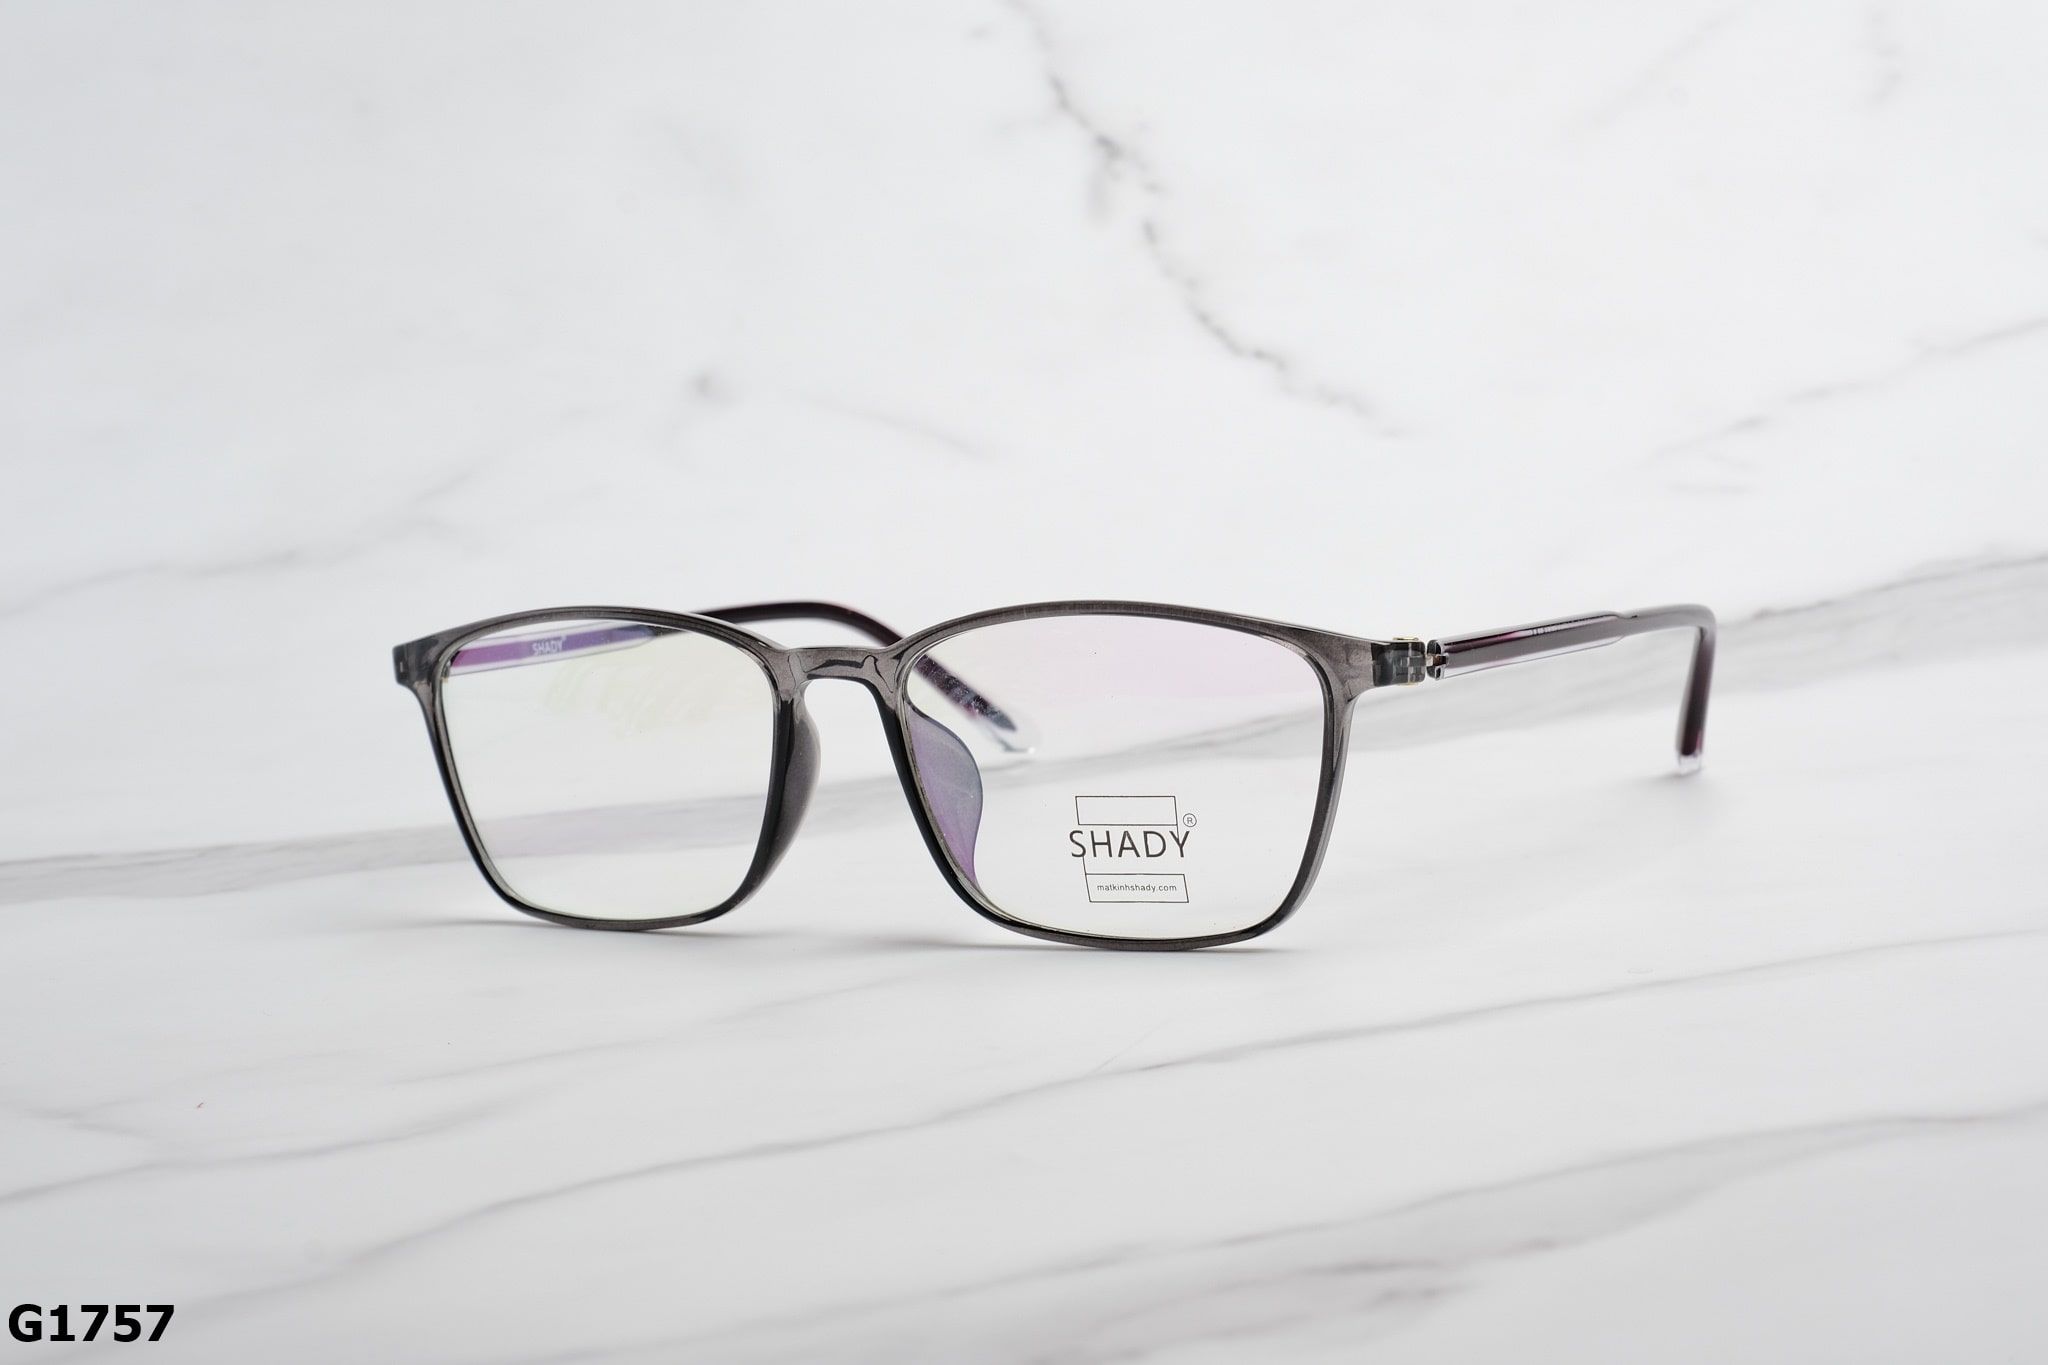  SHADY Eyewear - Glasses - G1757 